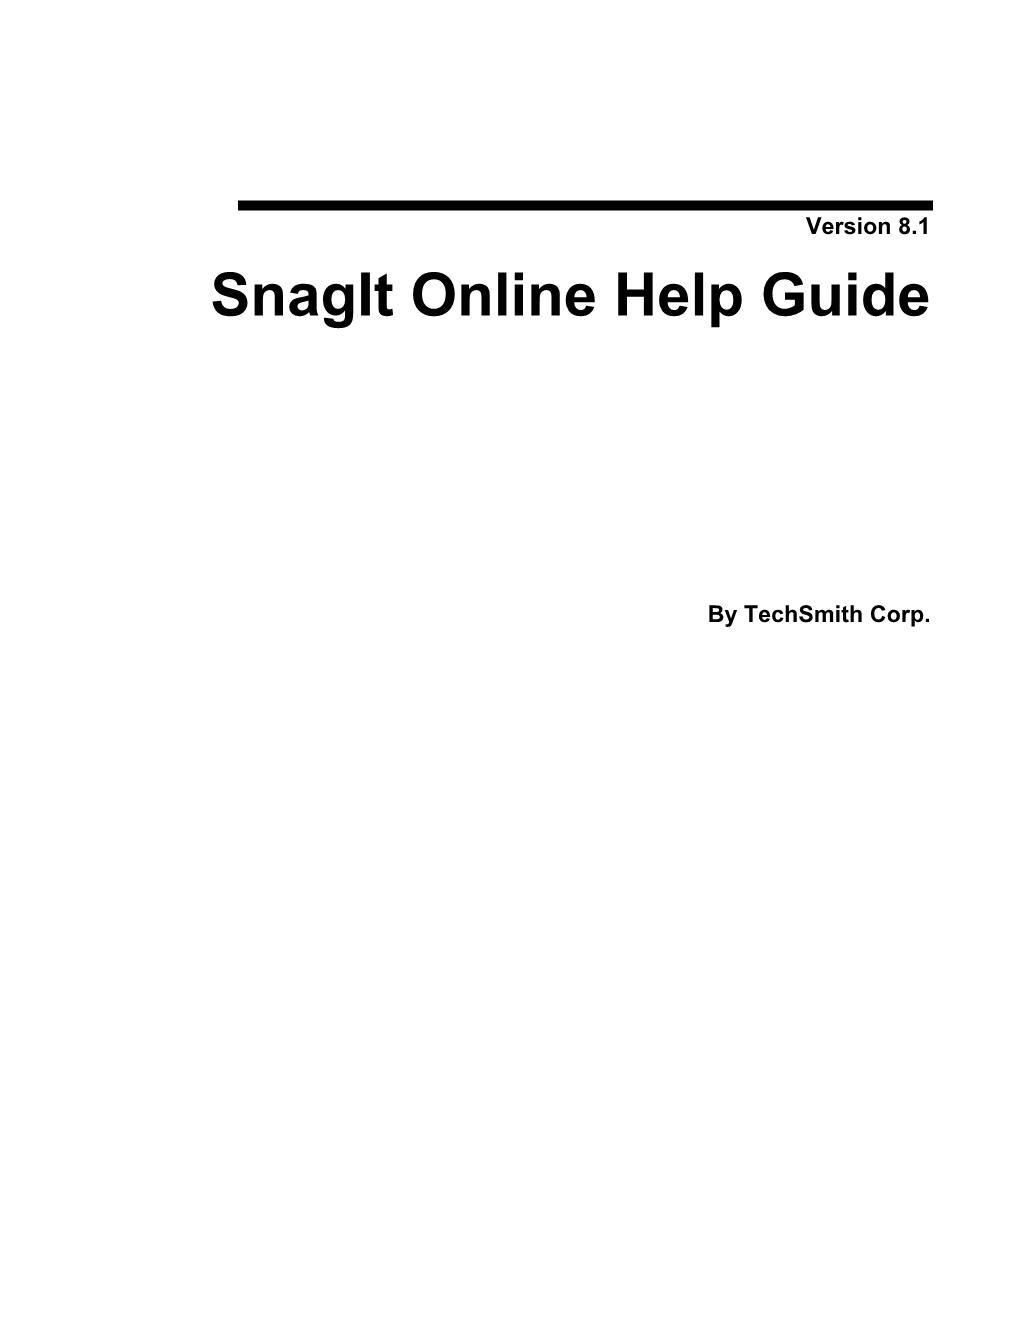 Snagit Online Help Guide